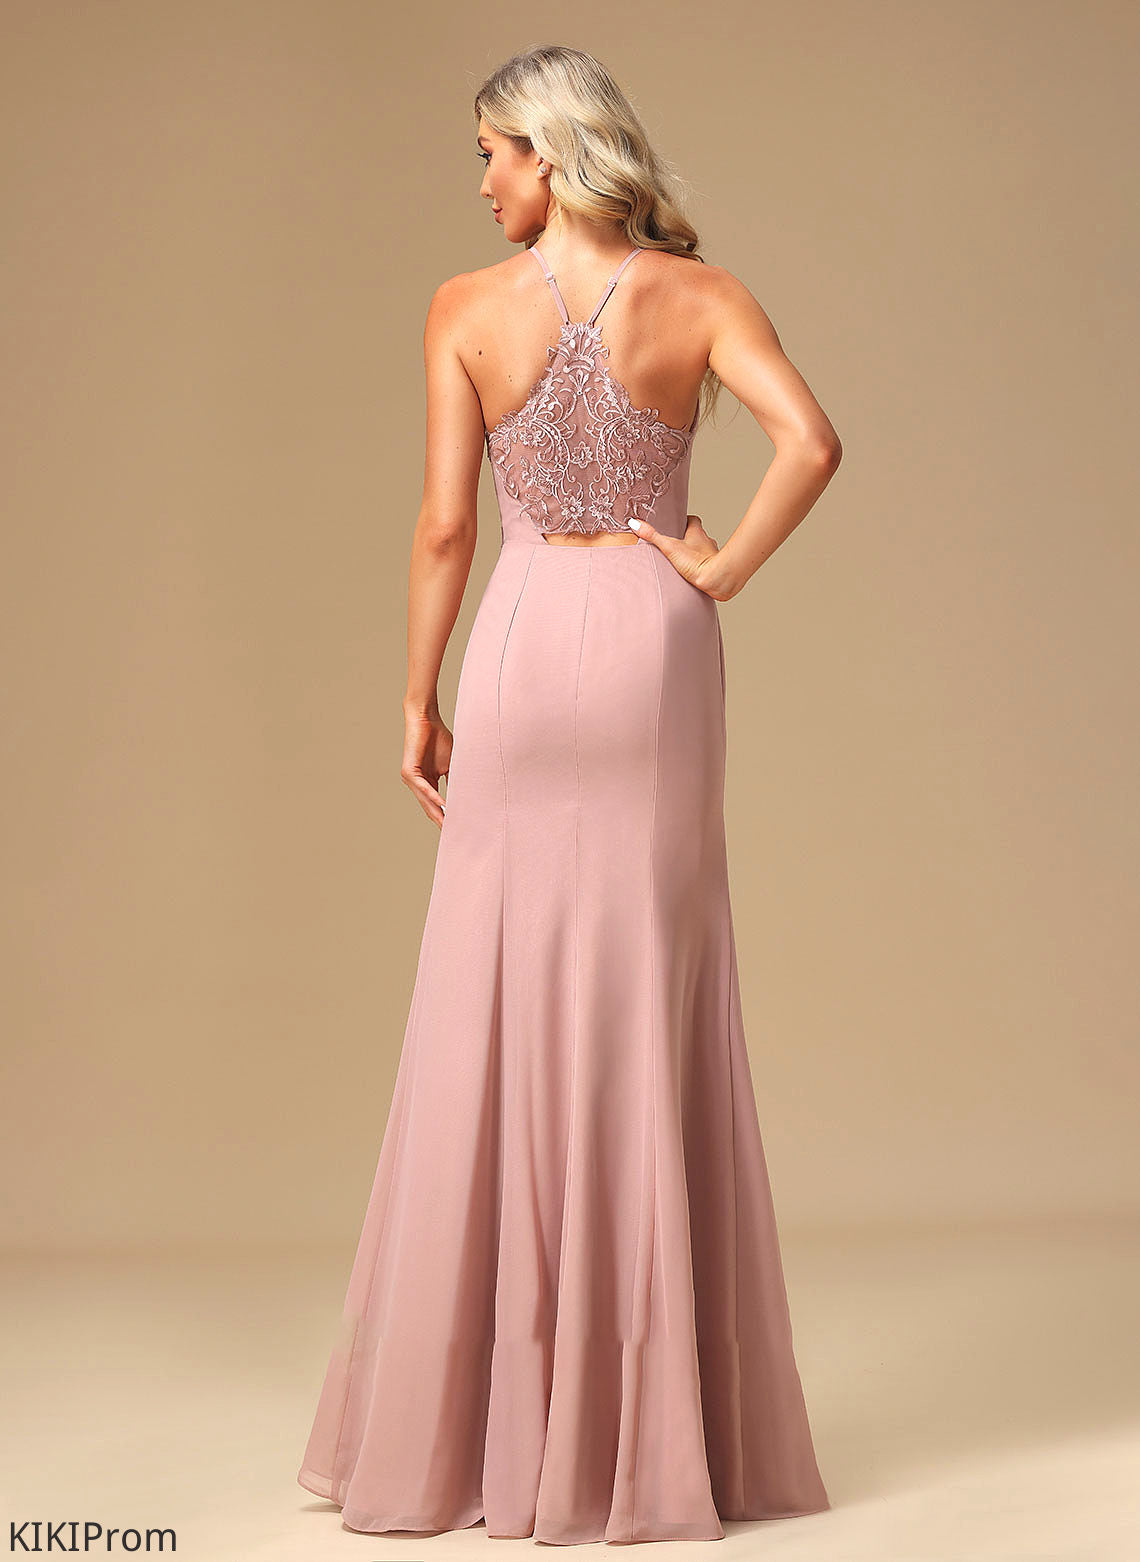 Fabric HighNeck Neckline SplitFront Embellishment Silhouette Length Lace A-Line Floor-Length Kayla Sleeveless Bridesmaid Dresses